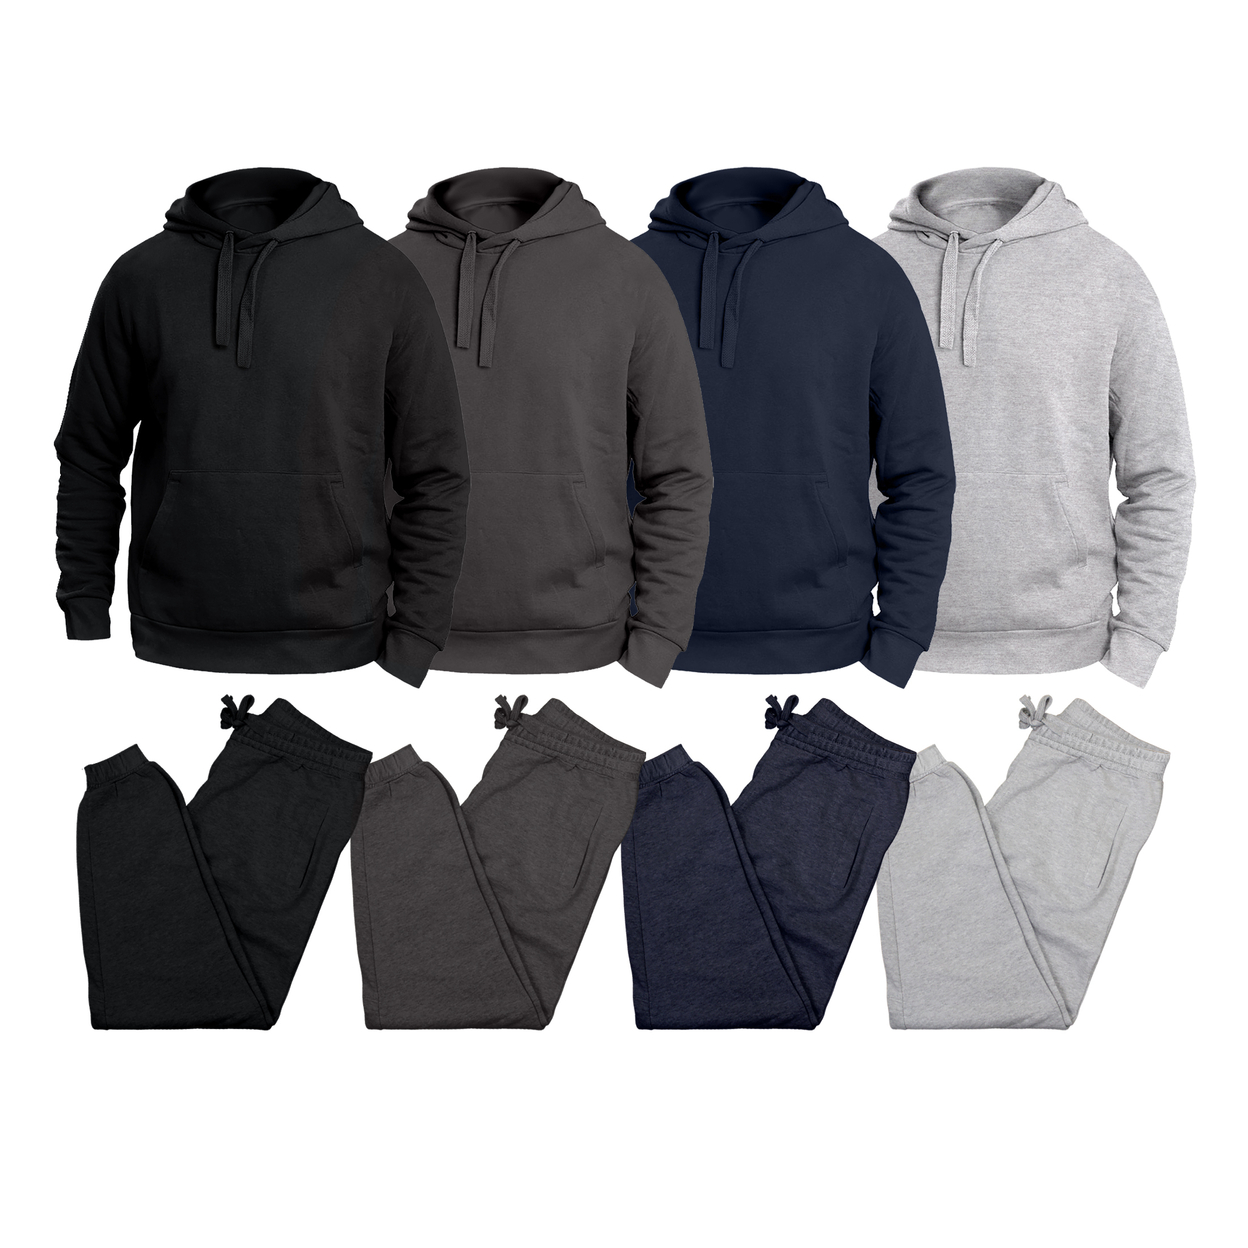 Multi-Pack: Big & Tall Men's Winter Warm Cozy Athletic Fleece Lined Multi-Pocket Cargo Sweatsuit - Grey, 1-pack, Small